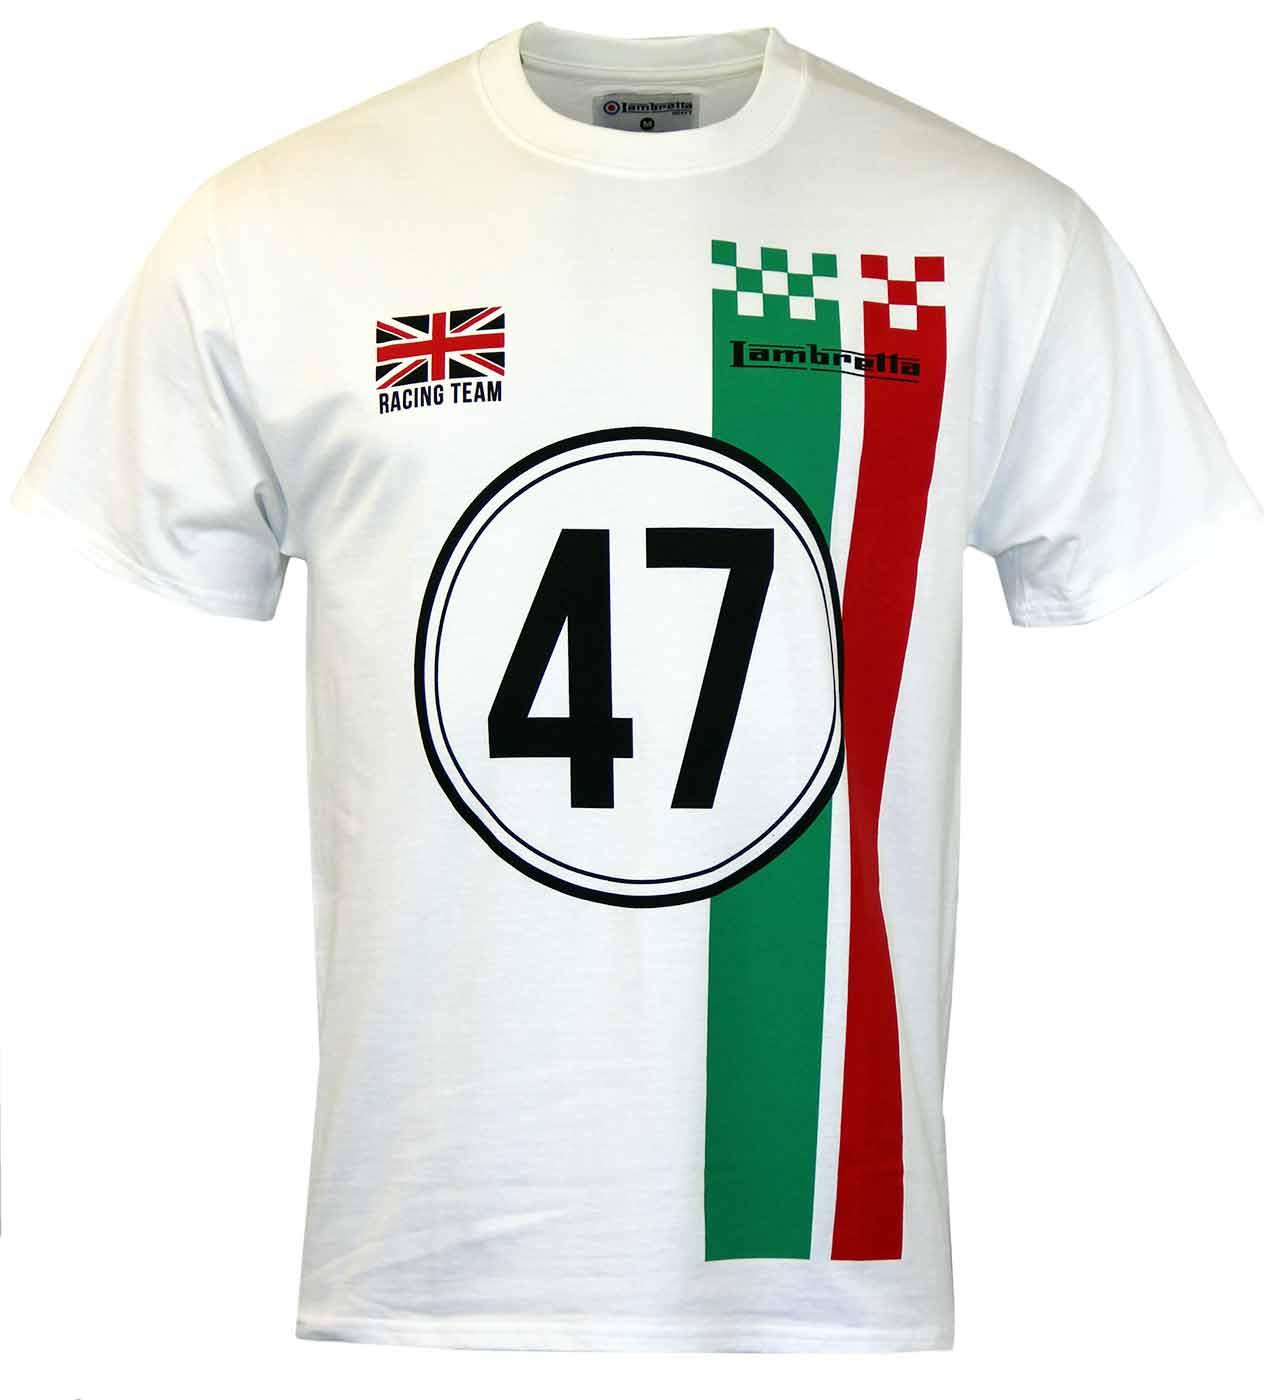 LAMBRETTA Racing Team Retro Mod T-Shirt